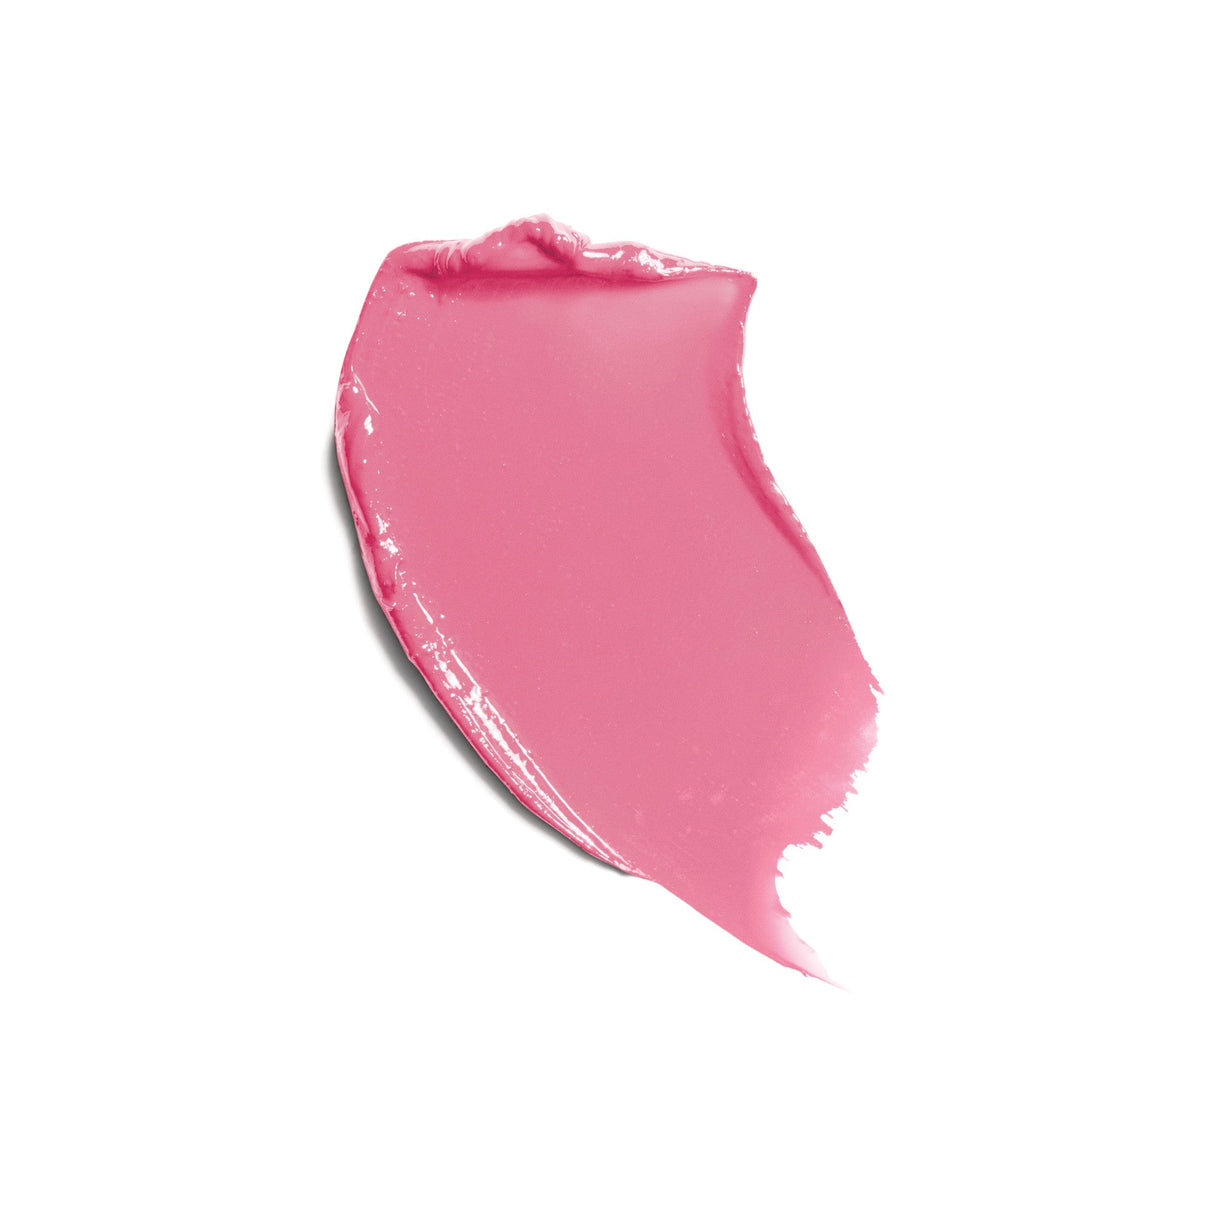 TechnoSatin Gel Lipstick-Shiseido